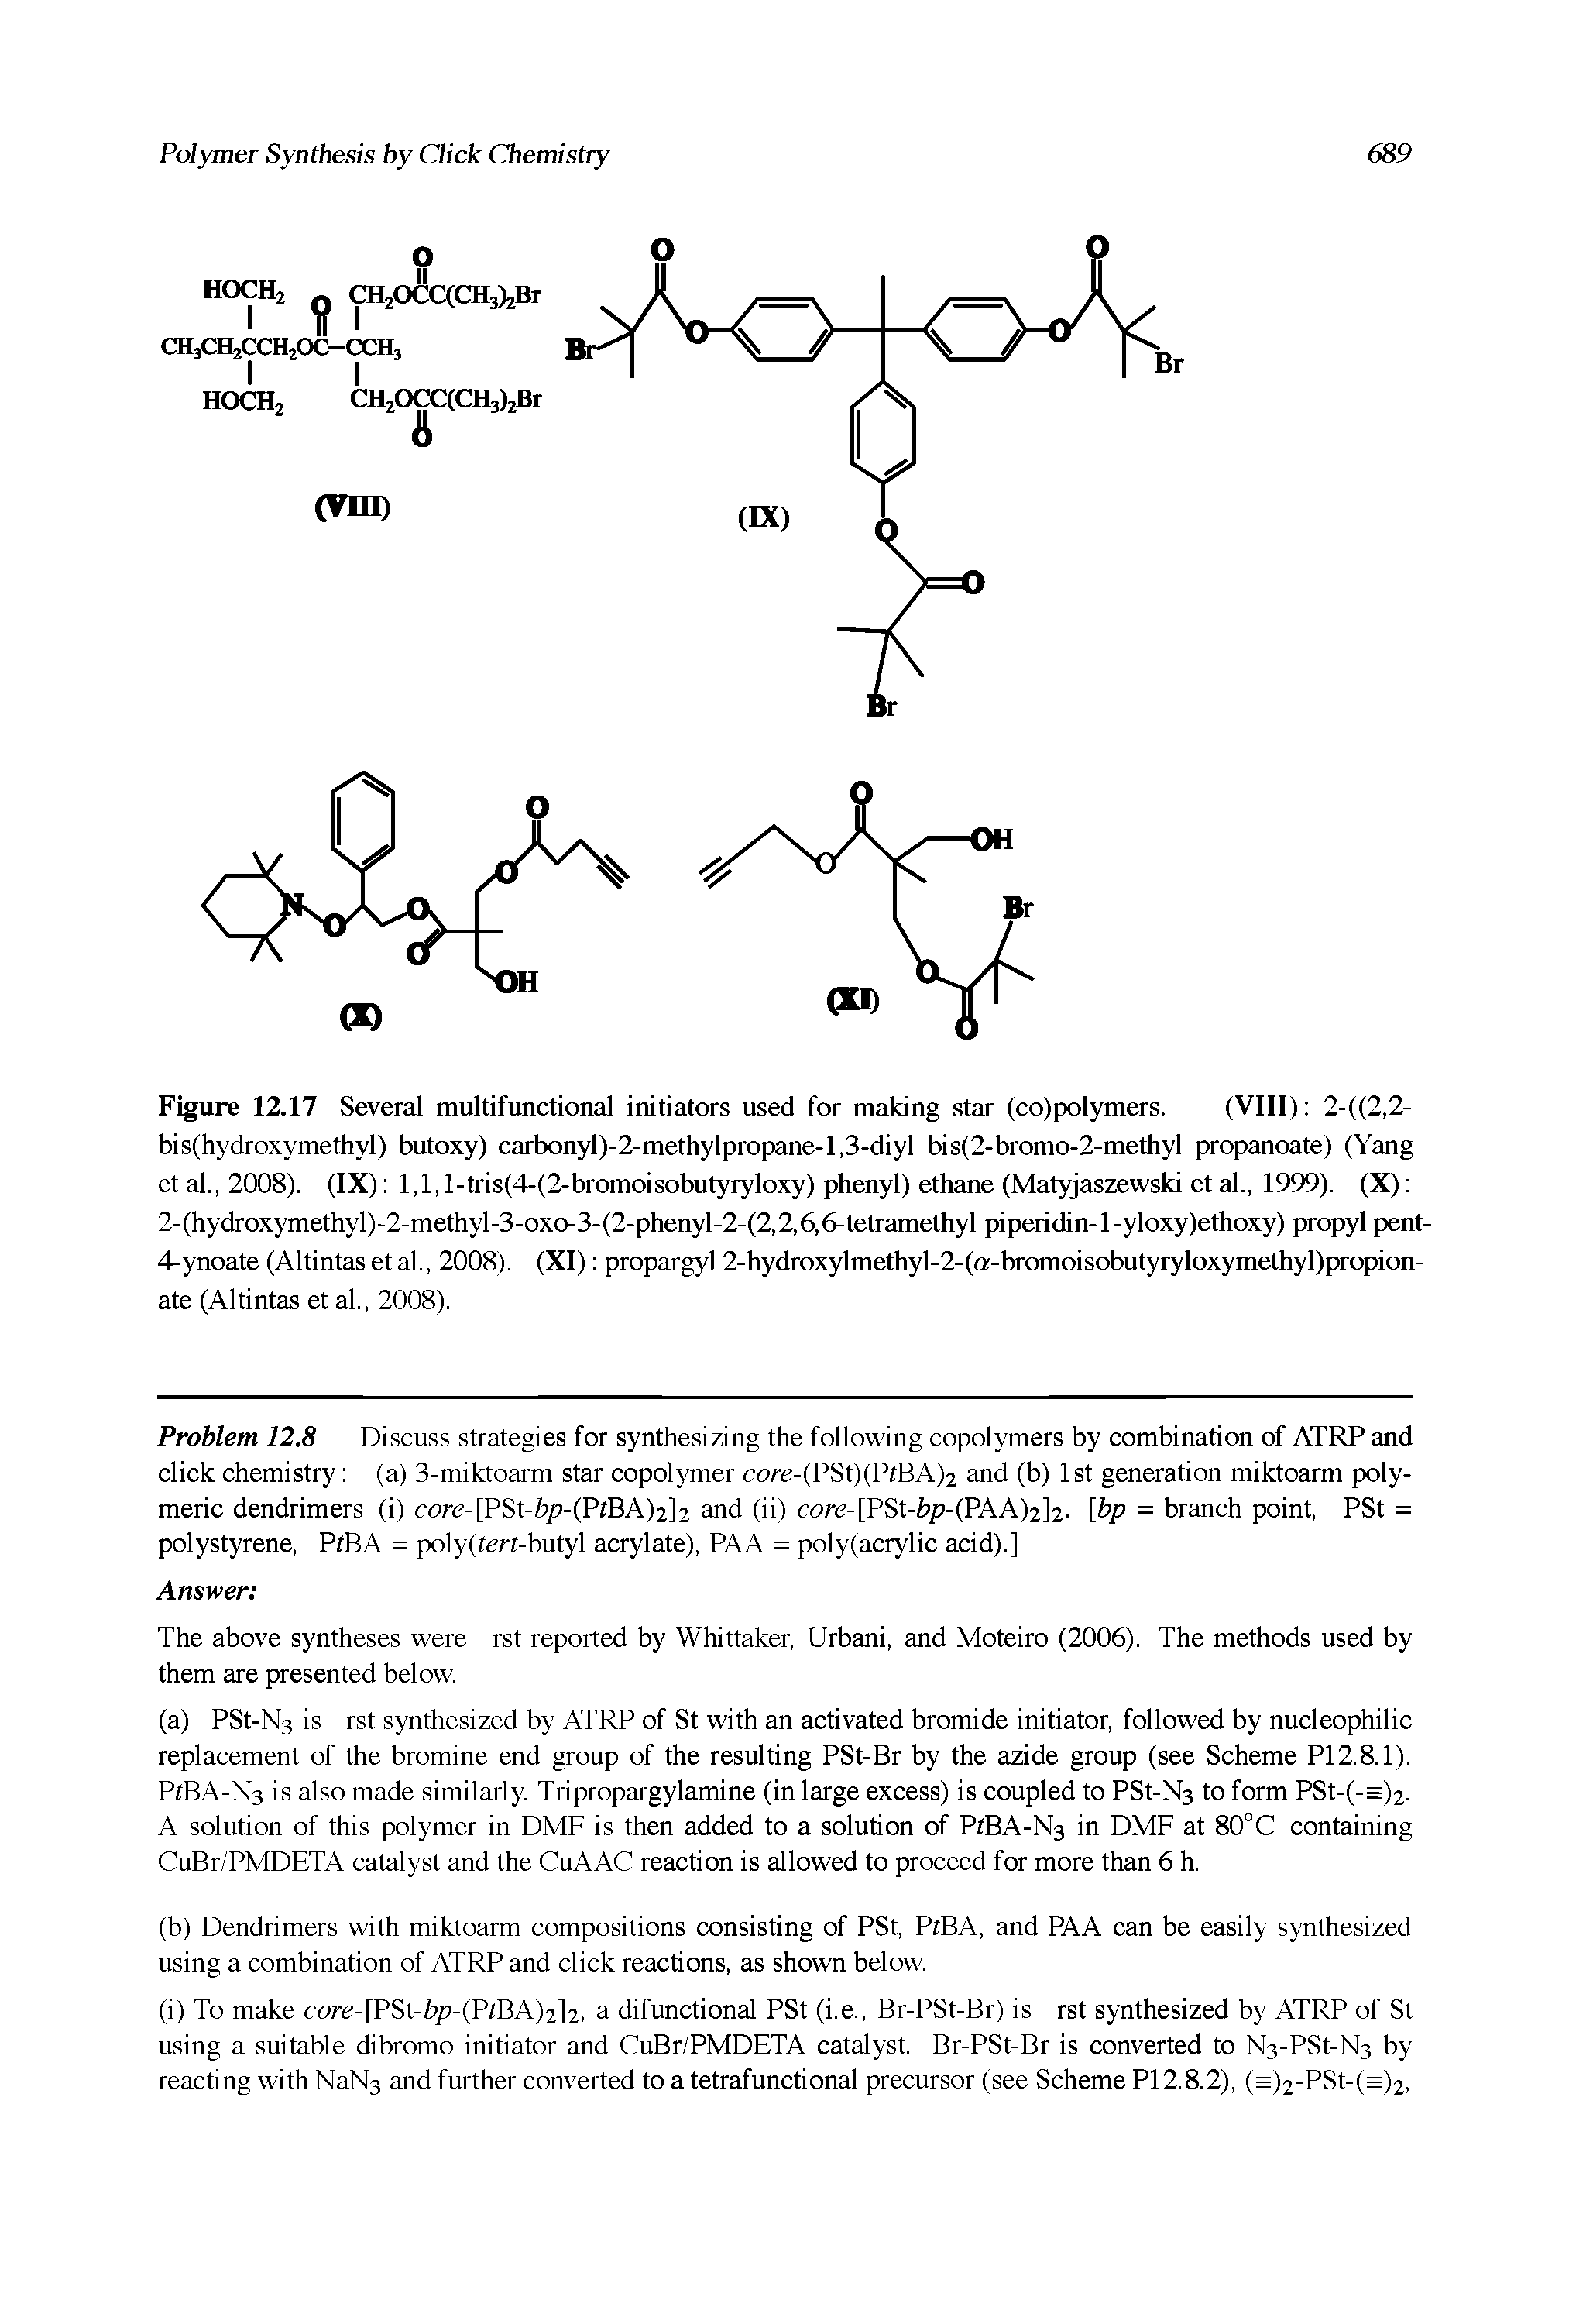 Figure 12.17 Several multifunctional initiators used for making star (co)polymers. (VIII) 2-((2,2-bis(hydroxymethyl) butoxy) carbonyl)-2-methylpropane-l,3-diyl bis(2-bromo-2-methyl propanoate) (Yang etal.,2008). (IX) l,l,l-tris(4-(2-bromoisobutyryloxy) phenyl) ethane (Matyjaszewski etal., 1999). (X) 2-(hydroxymethyl)-2-methyl-3-oxo-3-(2-phenyl-2-(2,2,6,6-tetramethyl piperidin-l-yloxy)ethoxy) propyl pent-4-ynoate (Altintas et al., 2008). (XI) propargyl 2-hydroxylmethyl-2-(or-bromoisobutyryloxymethyl)propion-ate (Altintas et al., 2008).